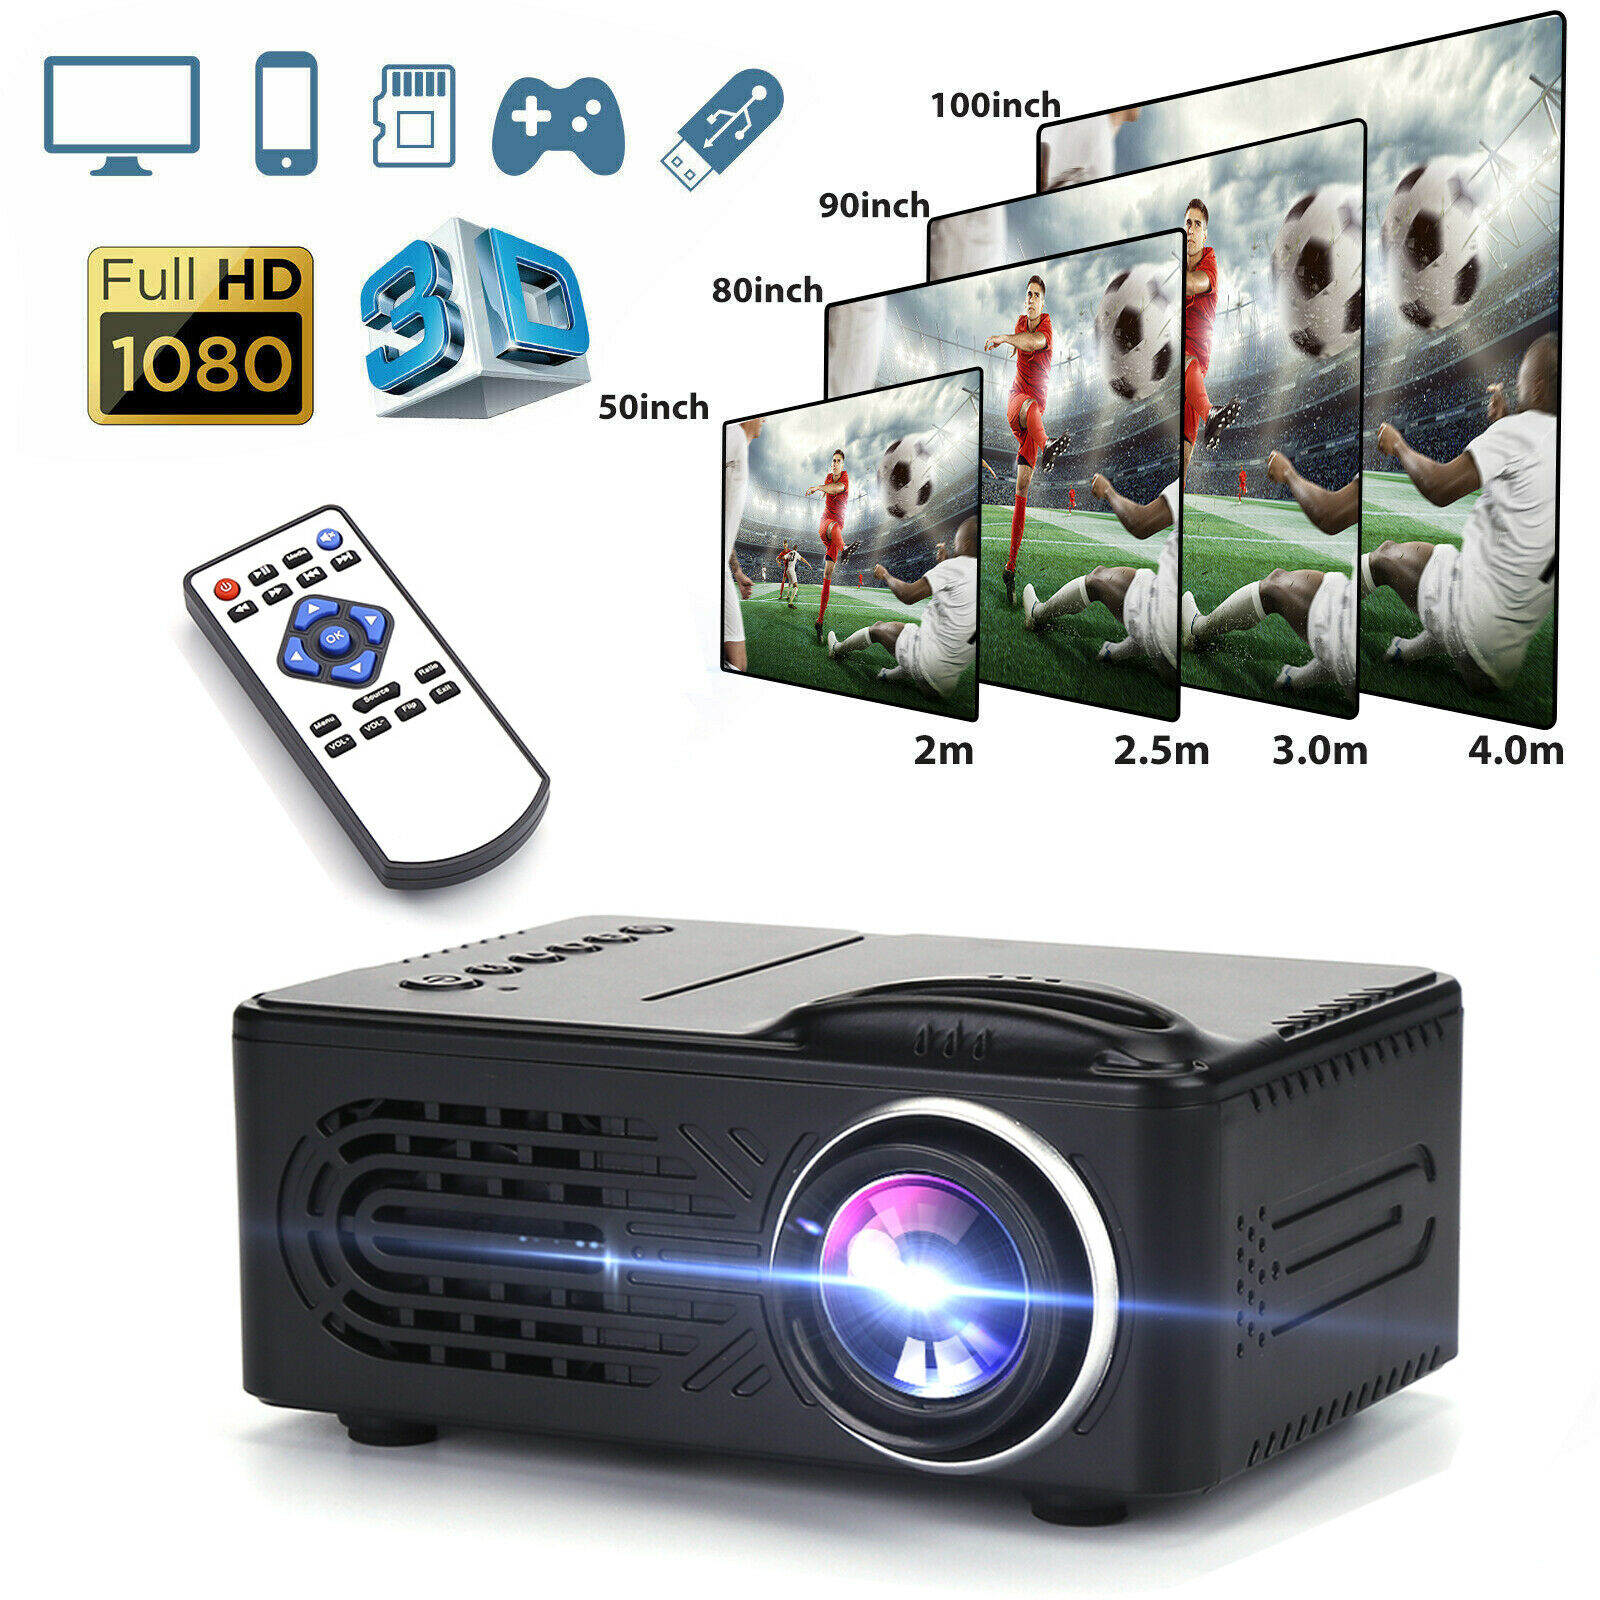 Mini Led Projector Full Hd 1080p Portable Video Movie Home Theater Cinema Hdmi